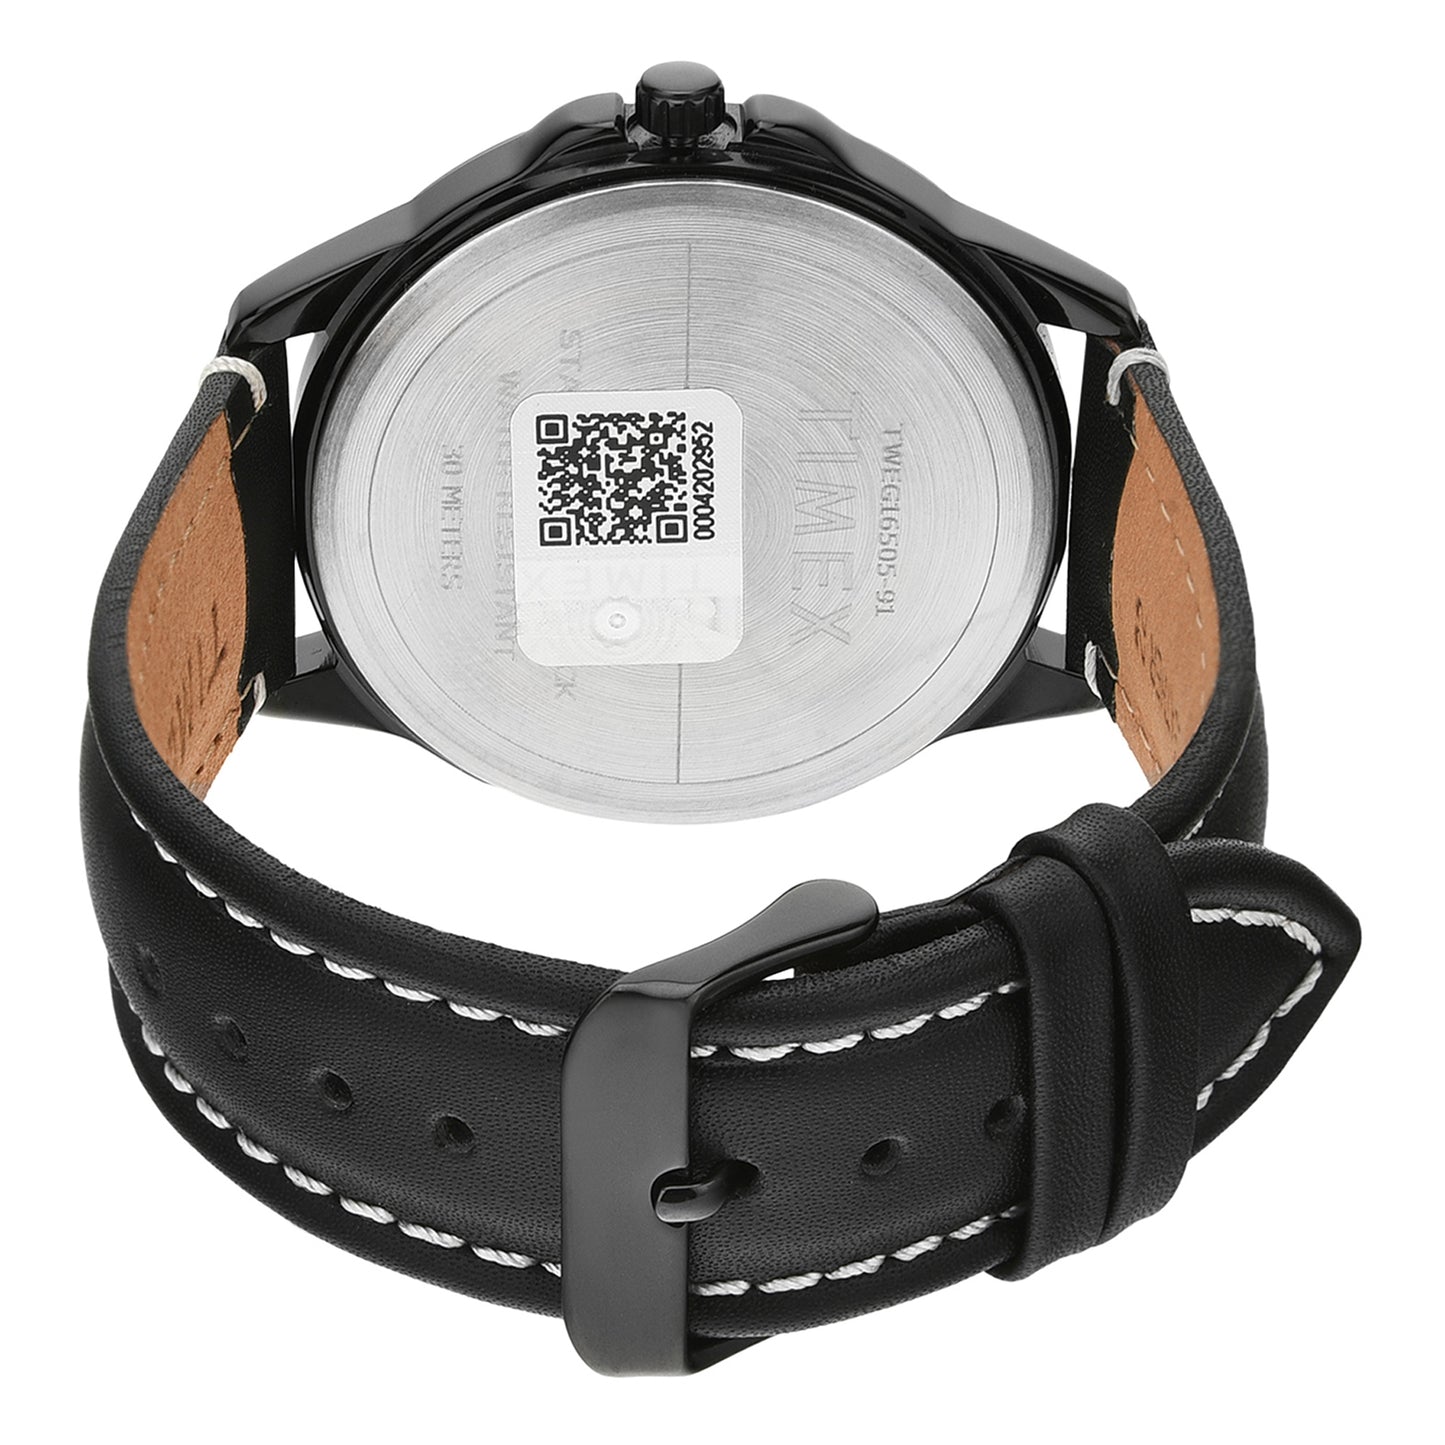 Timex Grey Dial Men Analog Watch - TWEG16505